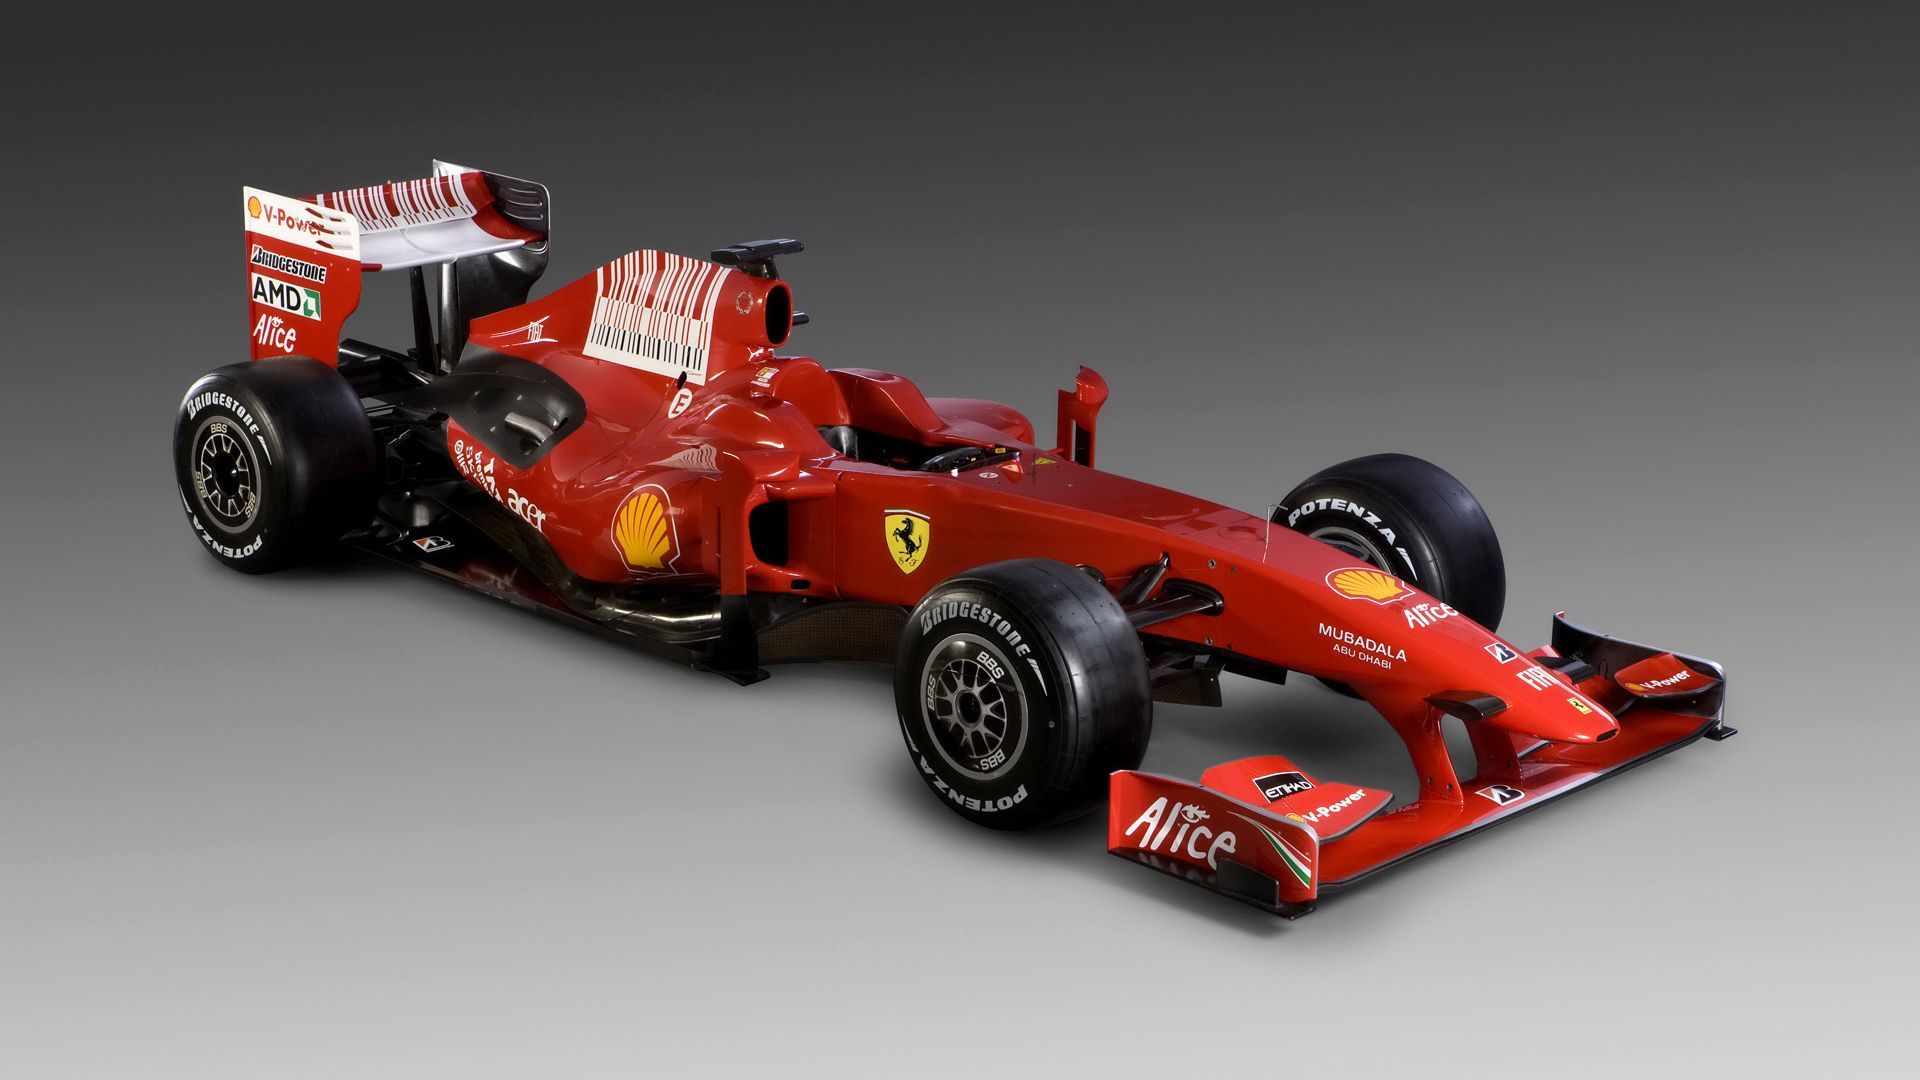 Ferrari F60 HDTV 1080p Wallpapers HD Backgrounds